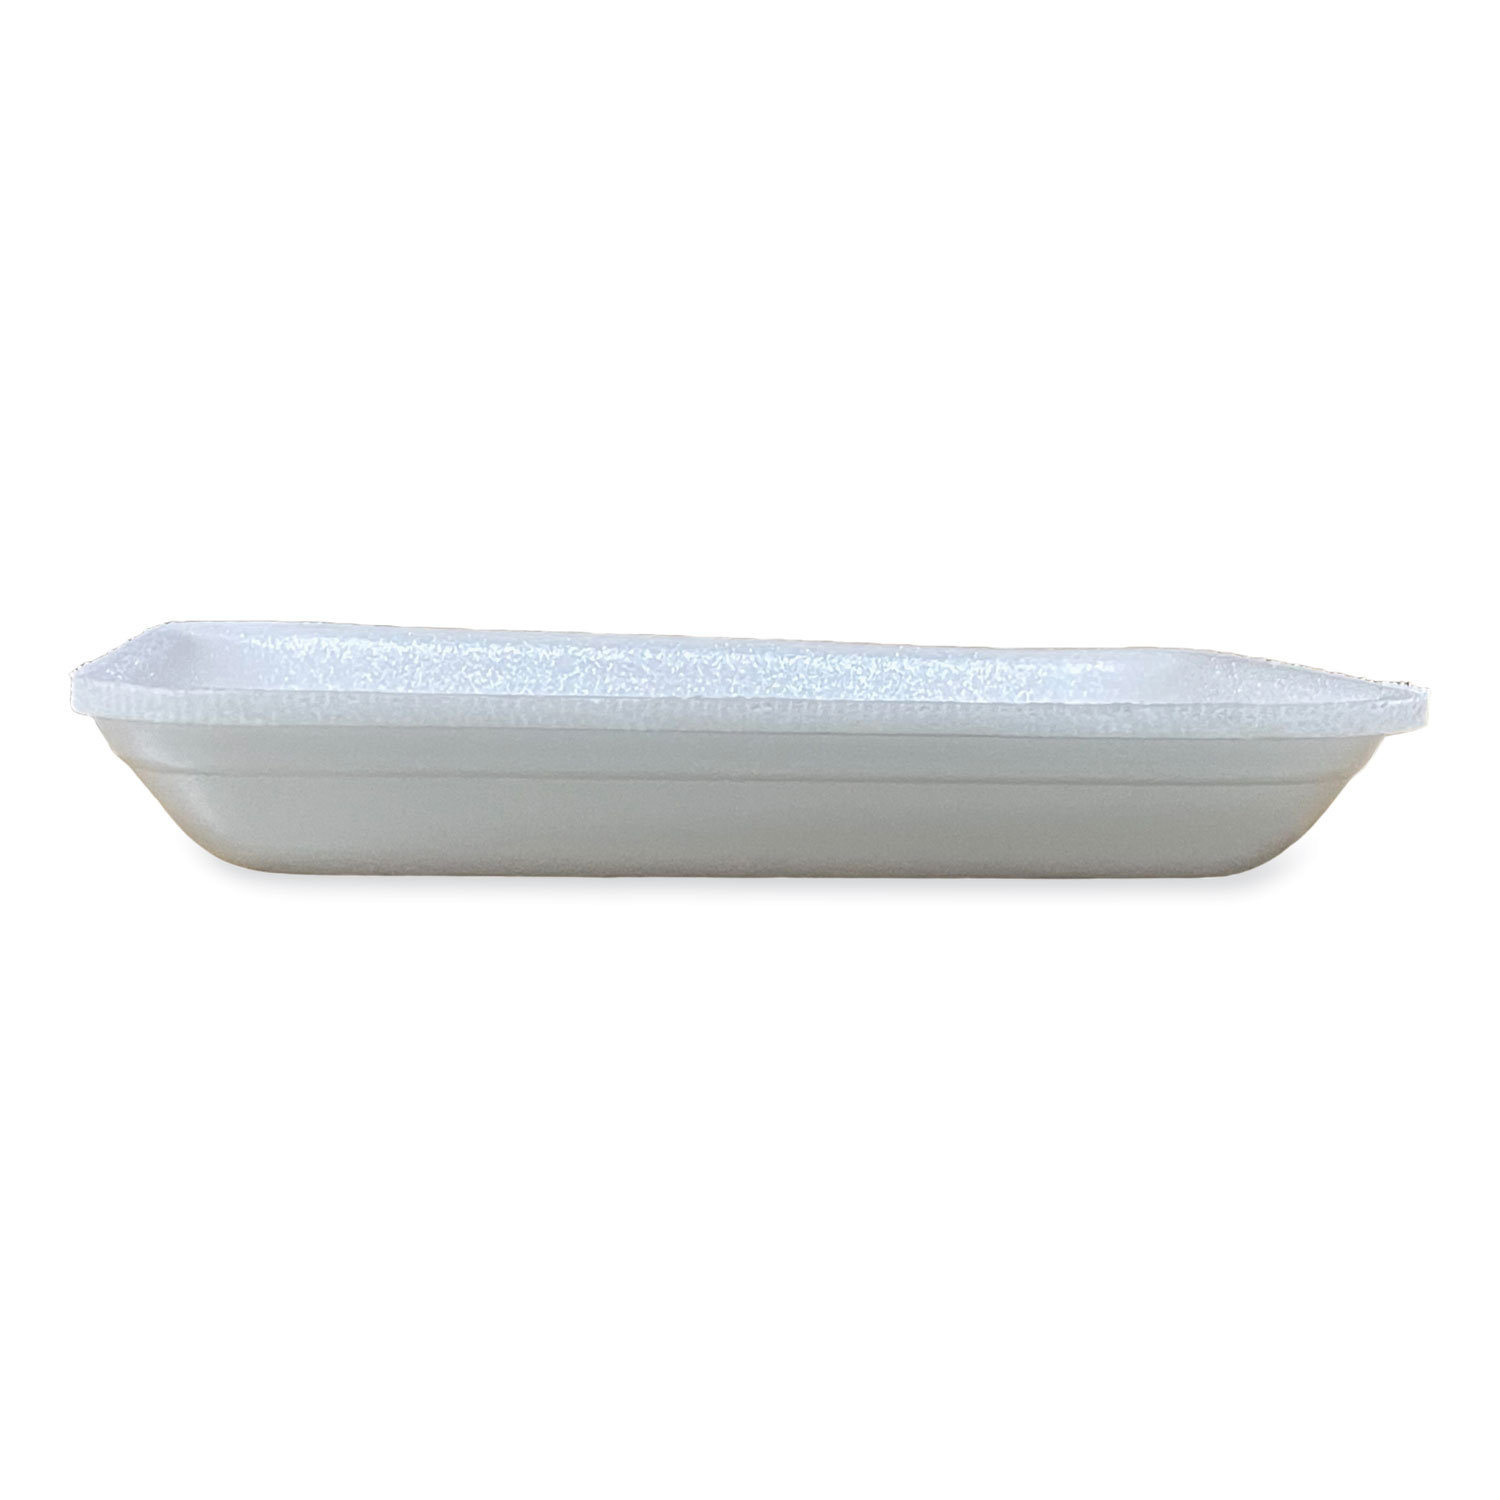 Sealed Air 8P White Foam Tray -- 400 per case